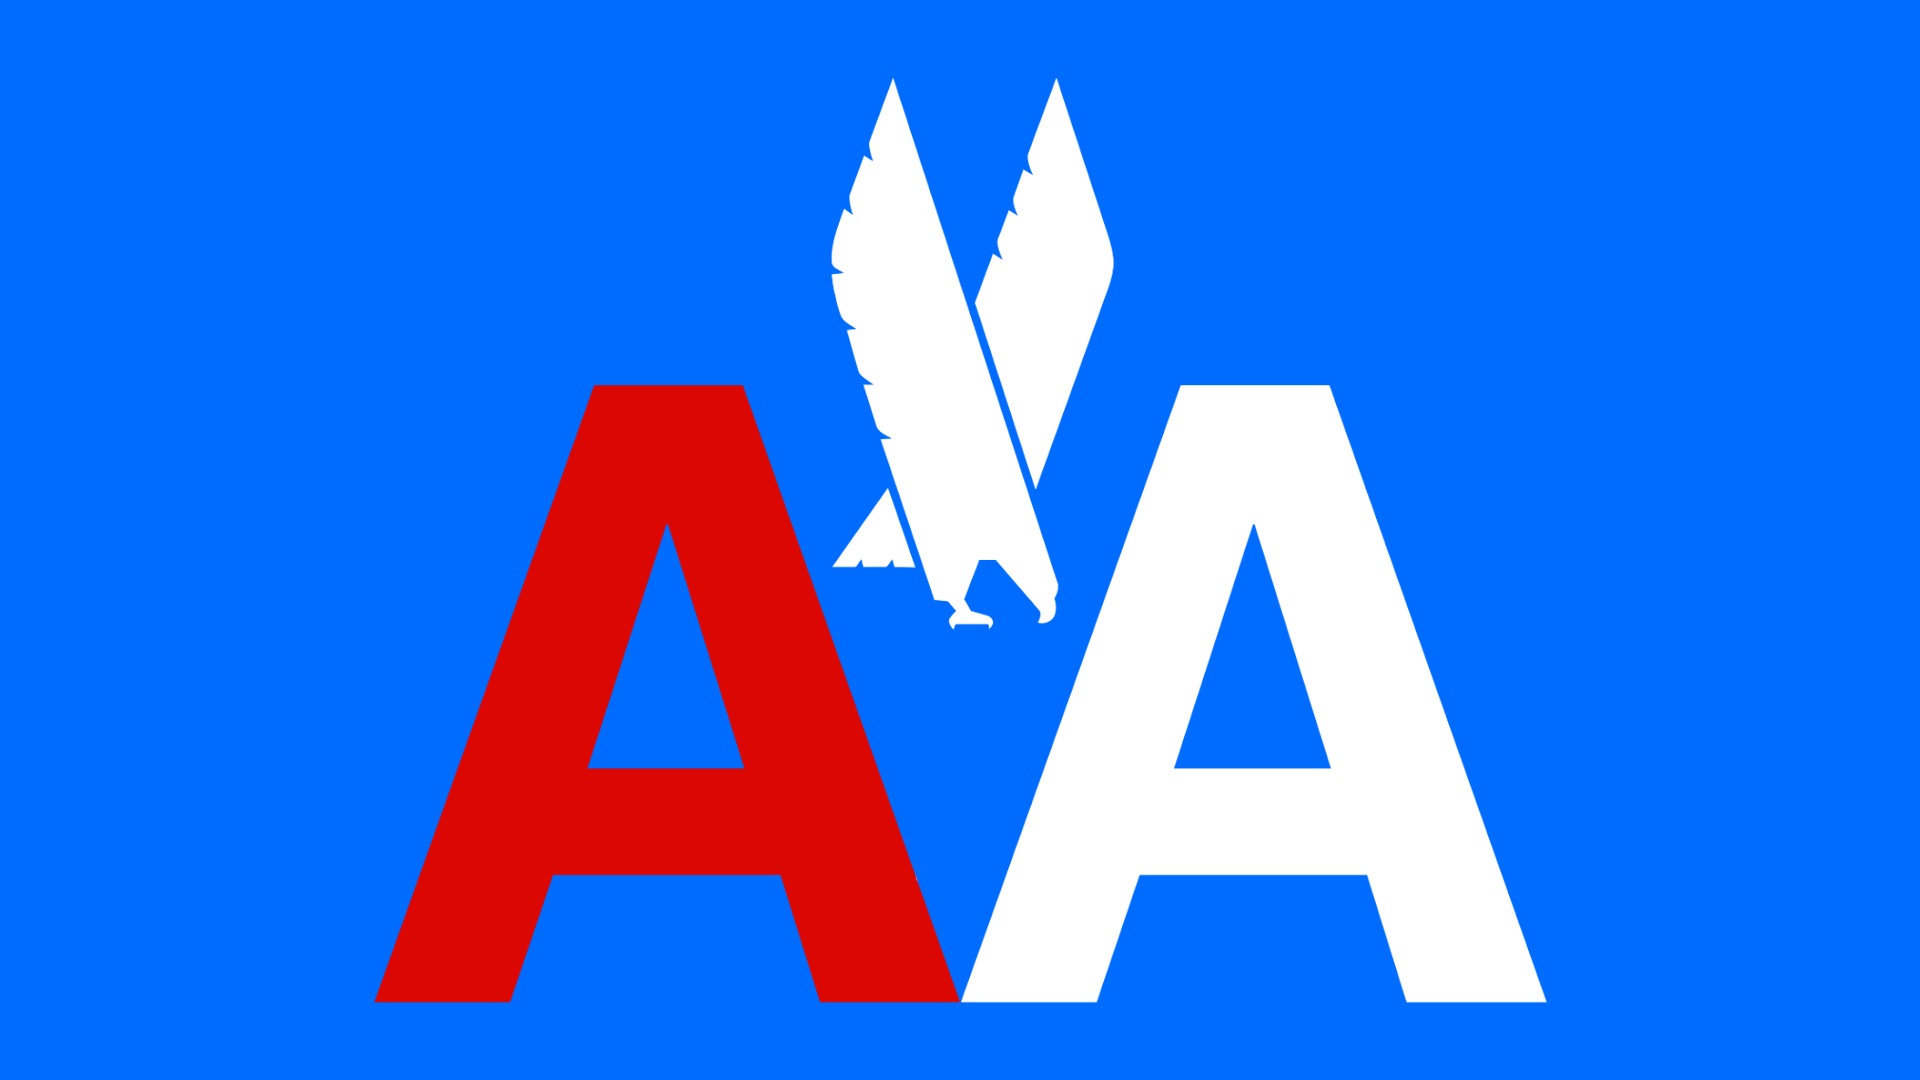 AA logo : histoire, signification et évolution, symbole